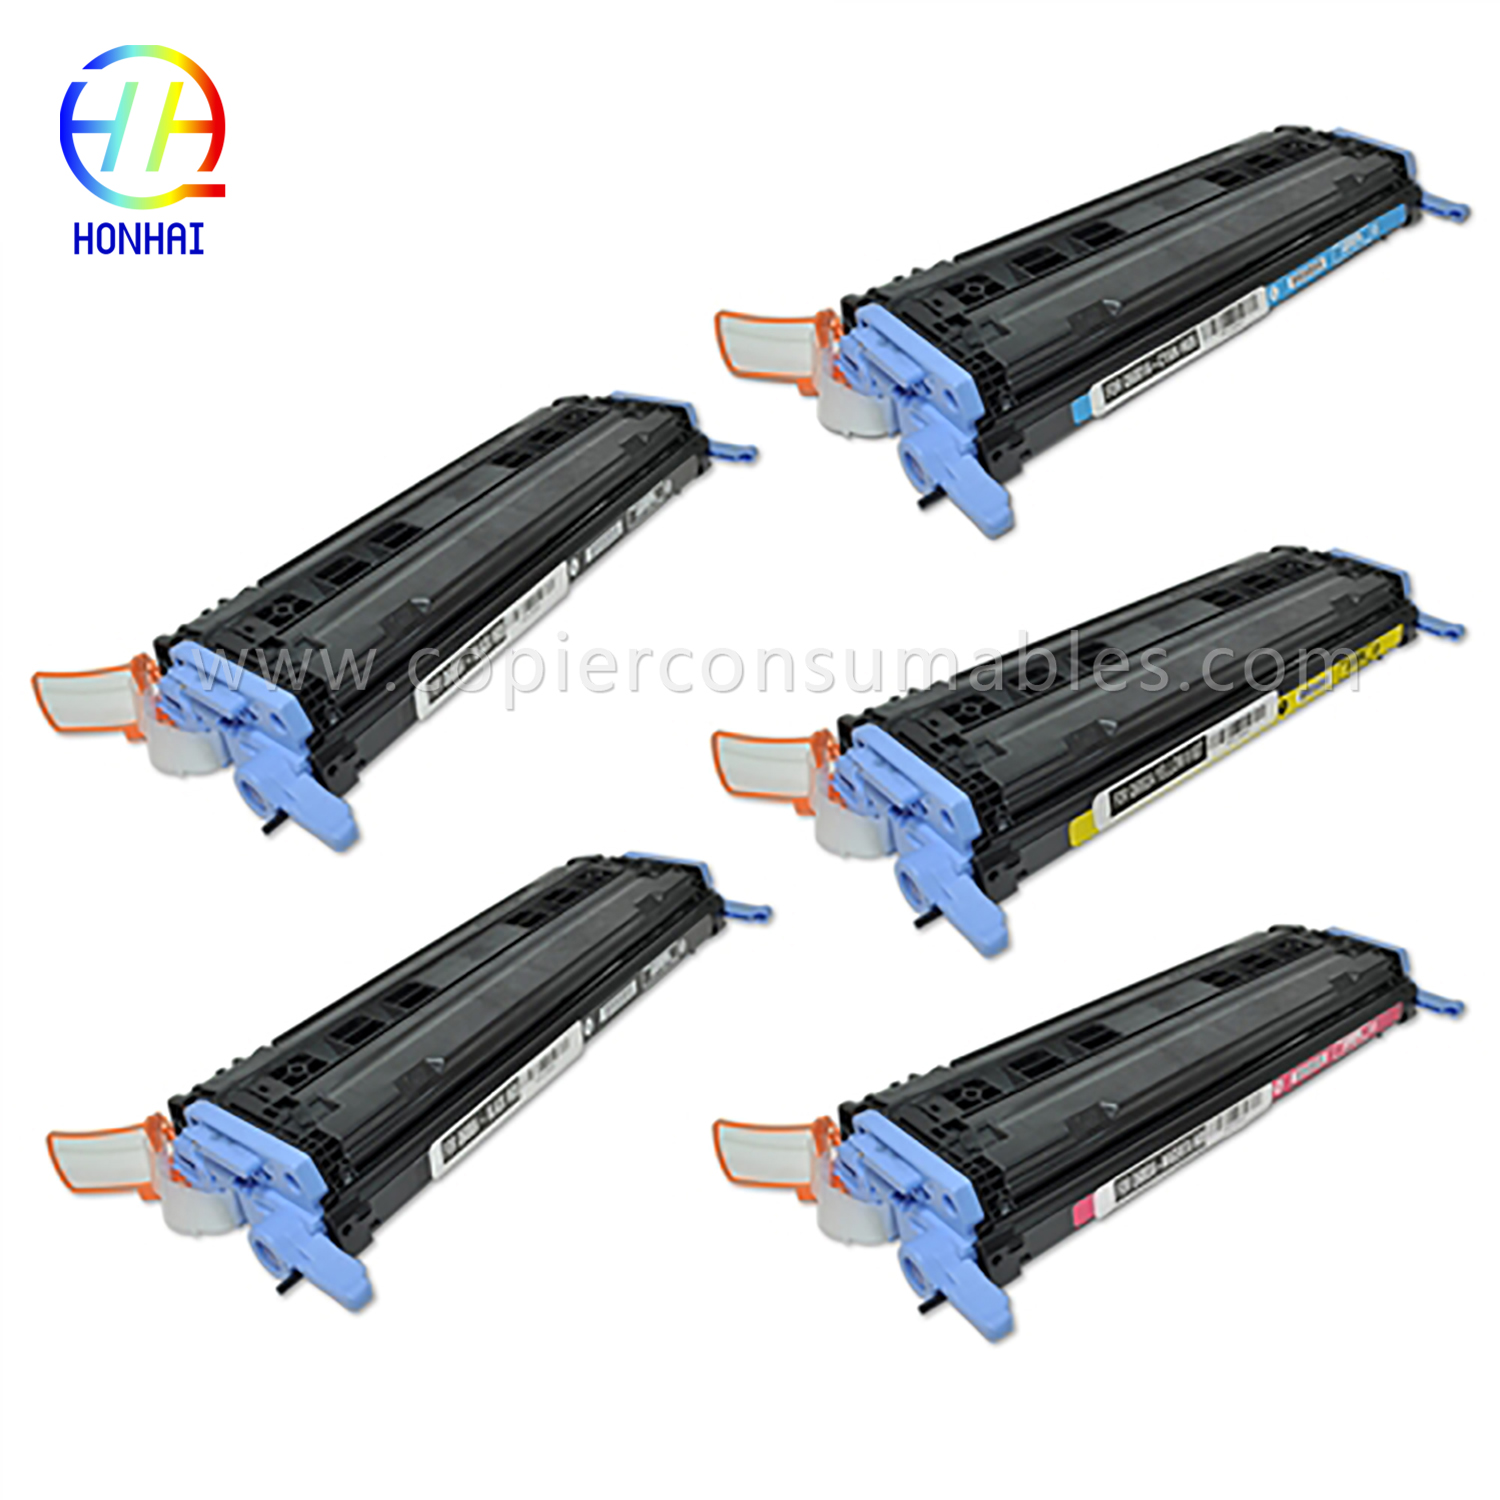 Toner Cartridge for HP Laserjet 1600 2600 2605 Cm1015mfp Cm1017mfp (Q6000A Q6001A Q6002A Q6003A) (2) 拷贝